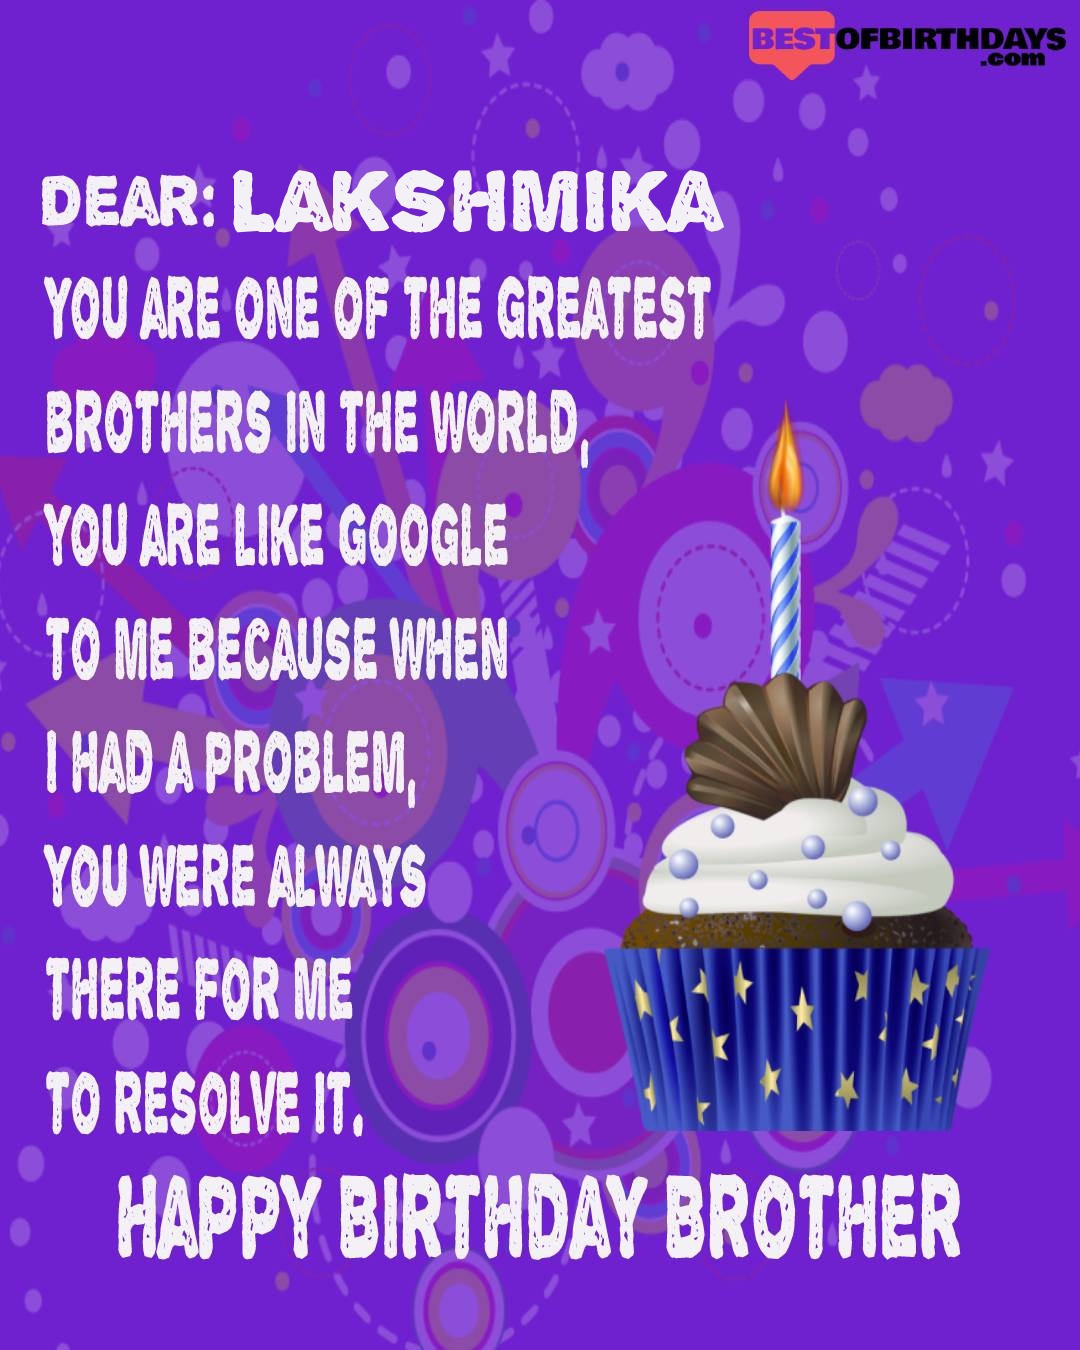 Happy birthday lakshmika bhai brother bro